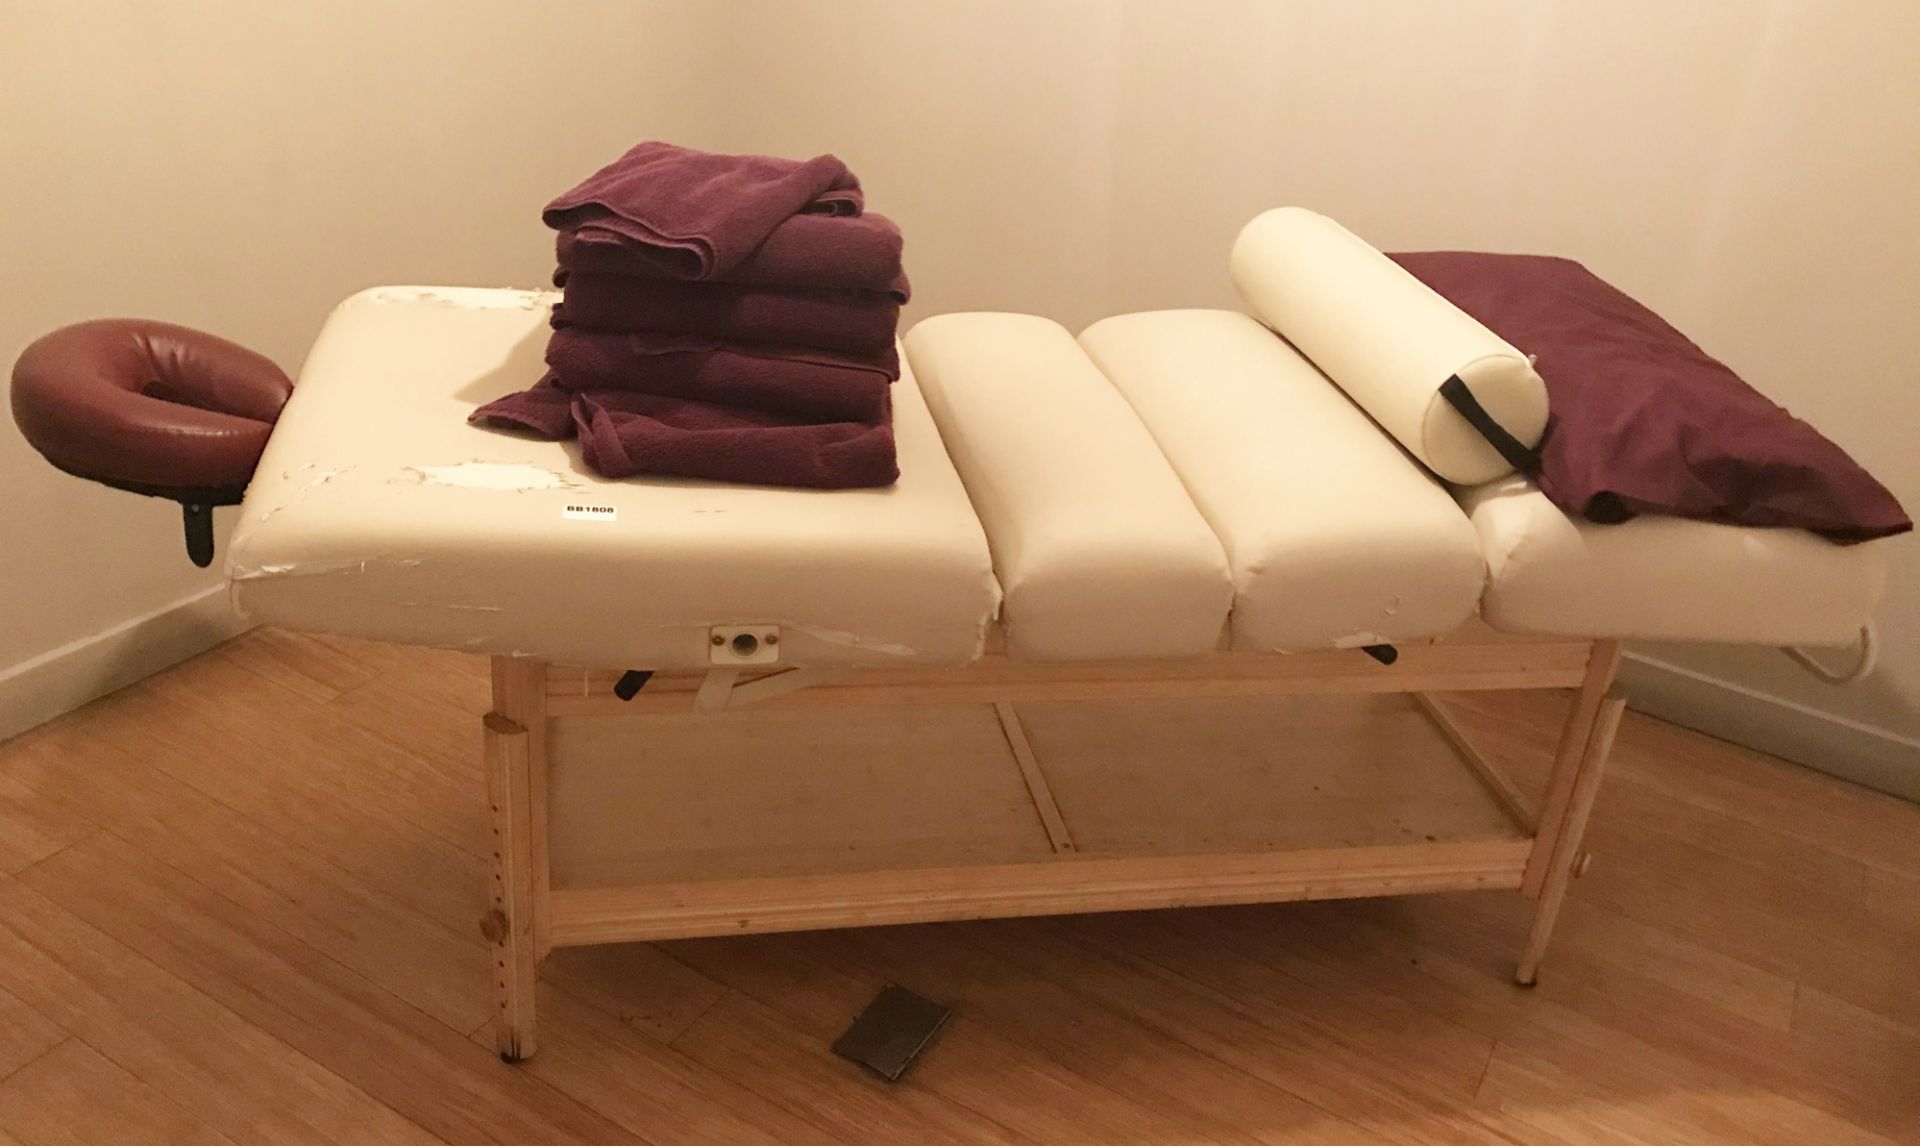 1 x Oakworks Clinician Manual Massage Table - Supplied With Headrest - CL587 - Location: London